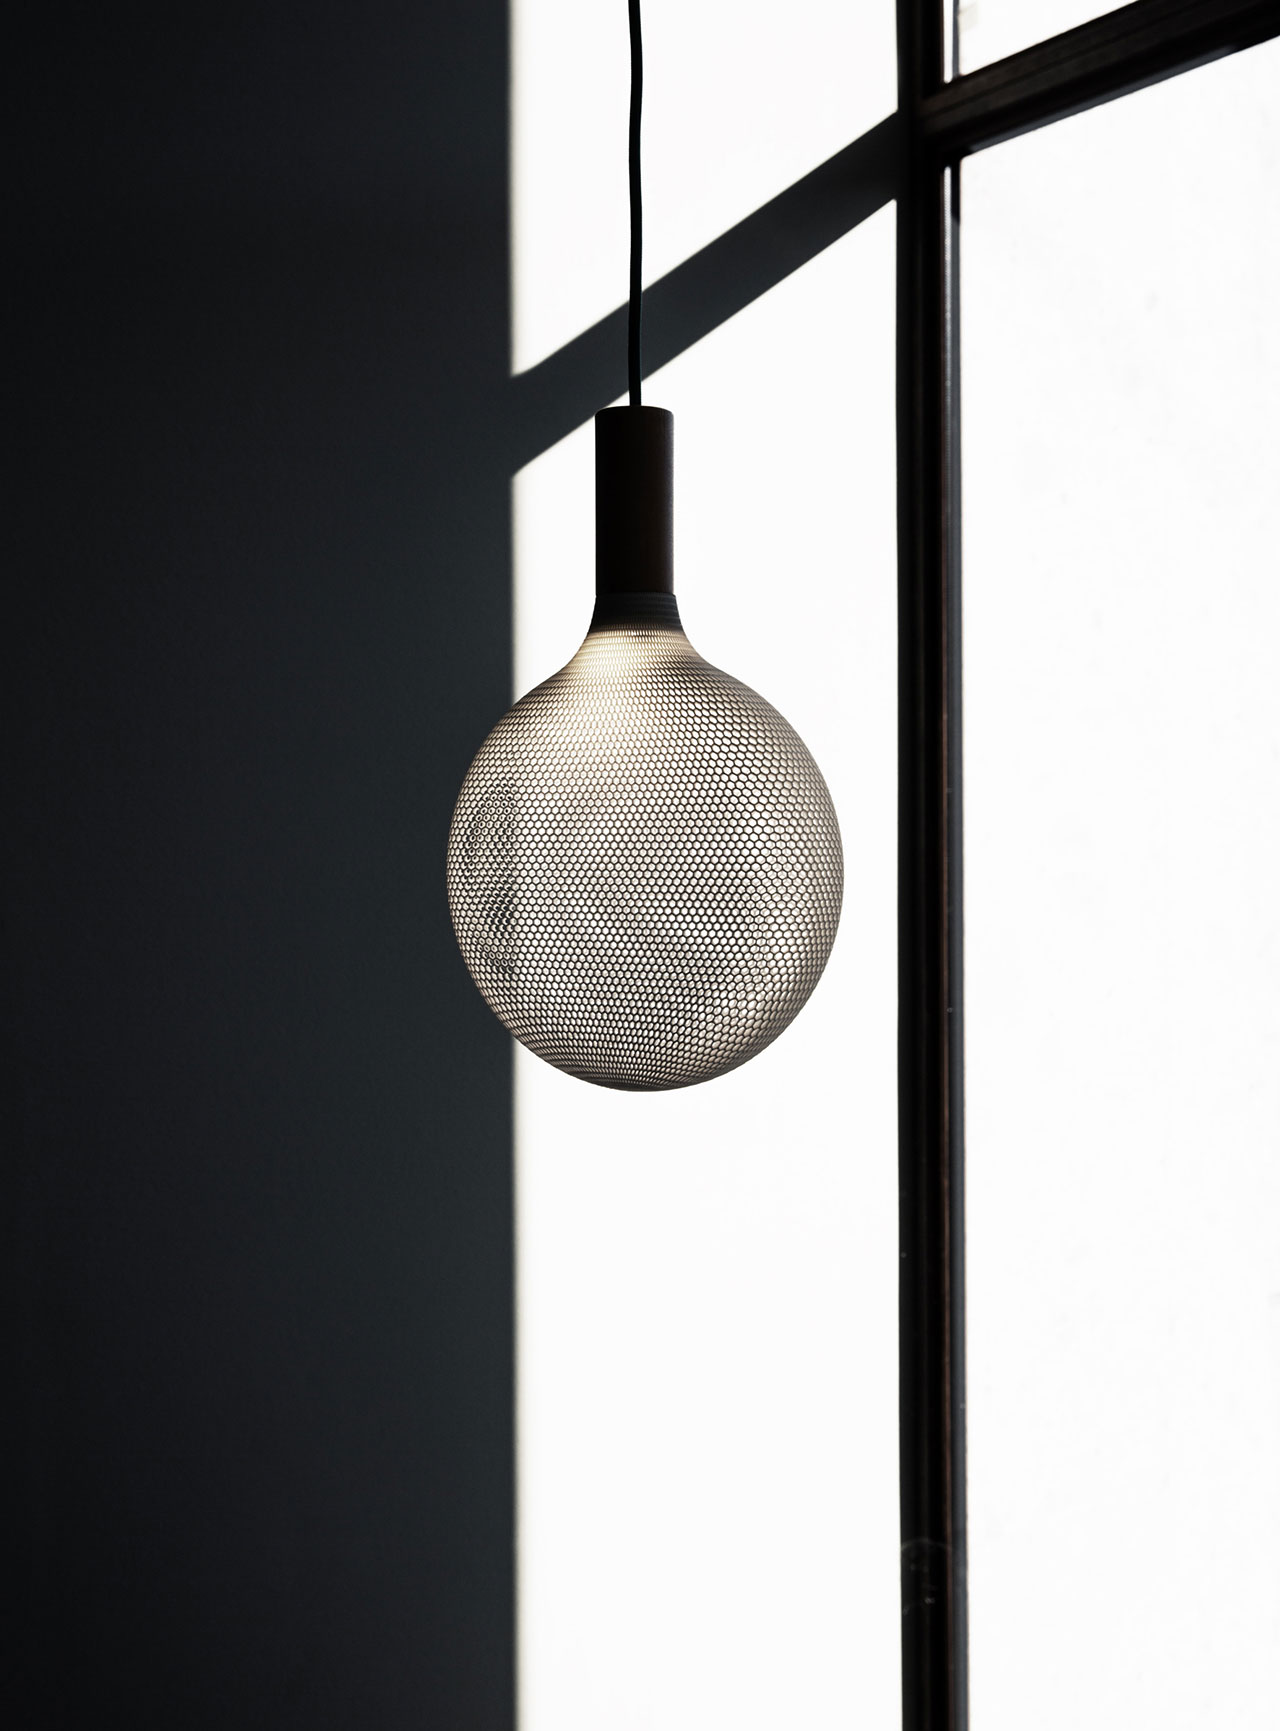 ExNovo, Affilia lamp. Photo courtesy alessandro zambelli design studio.